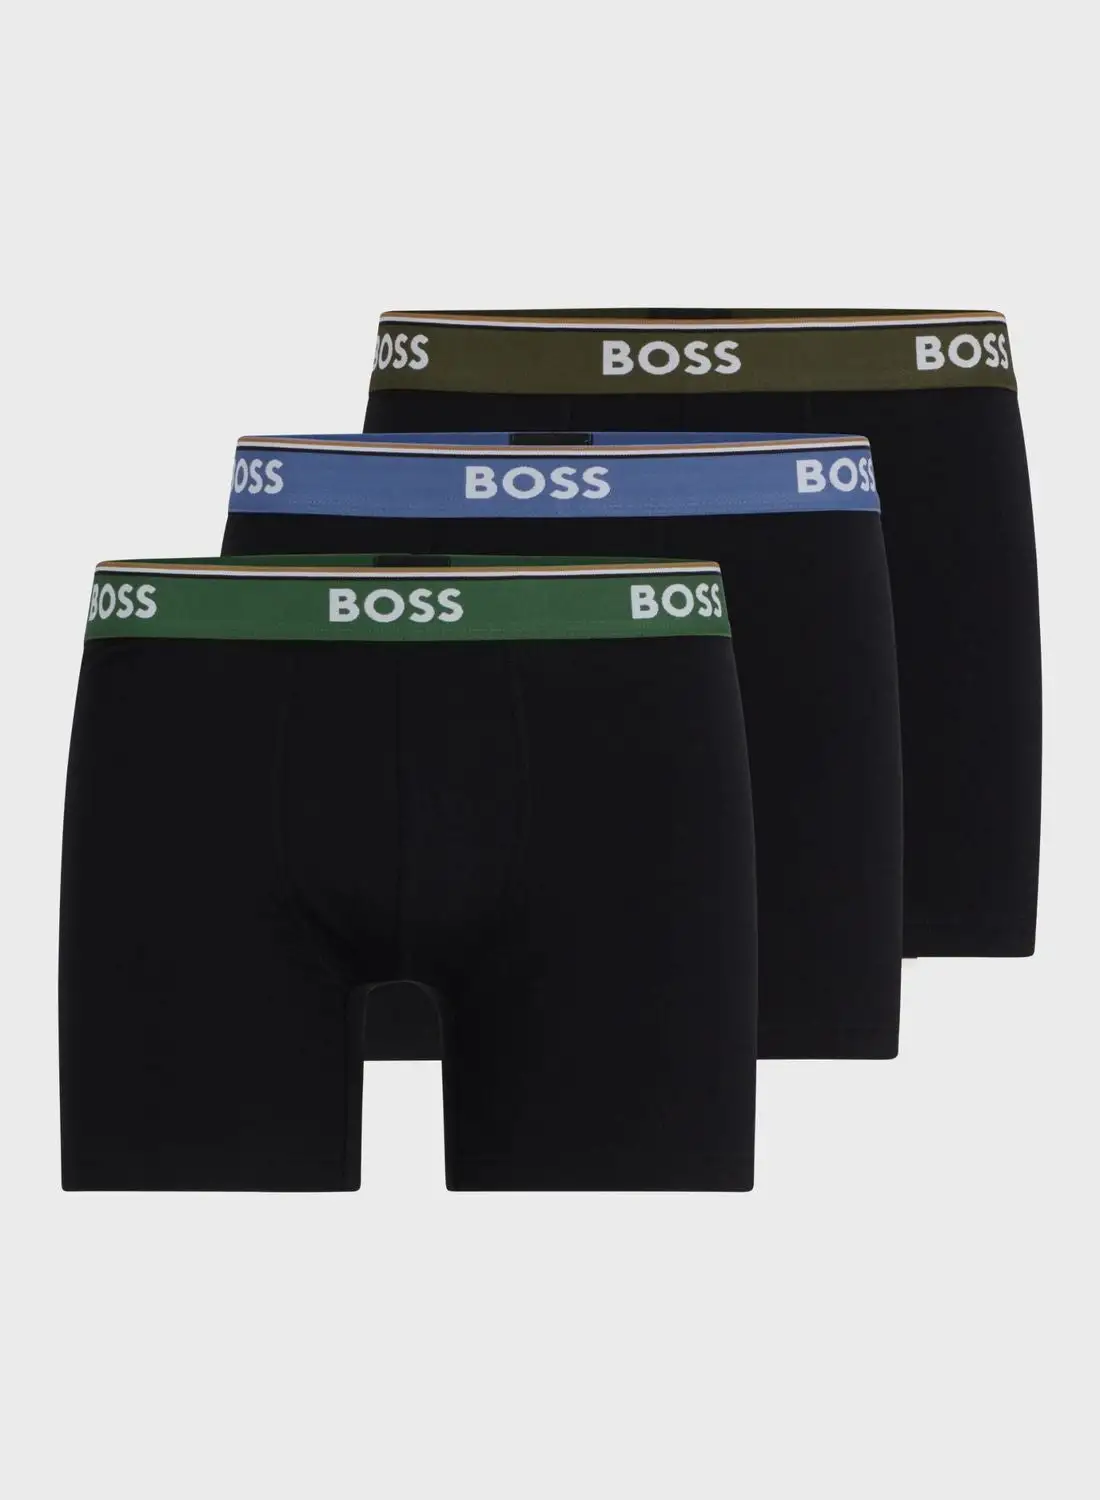 BOSS 3 - حزمة الملاكمين المتنوعة